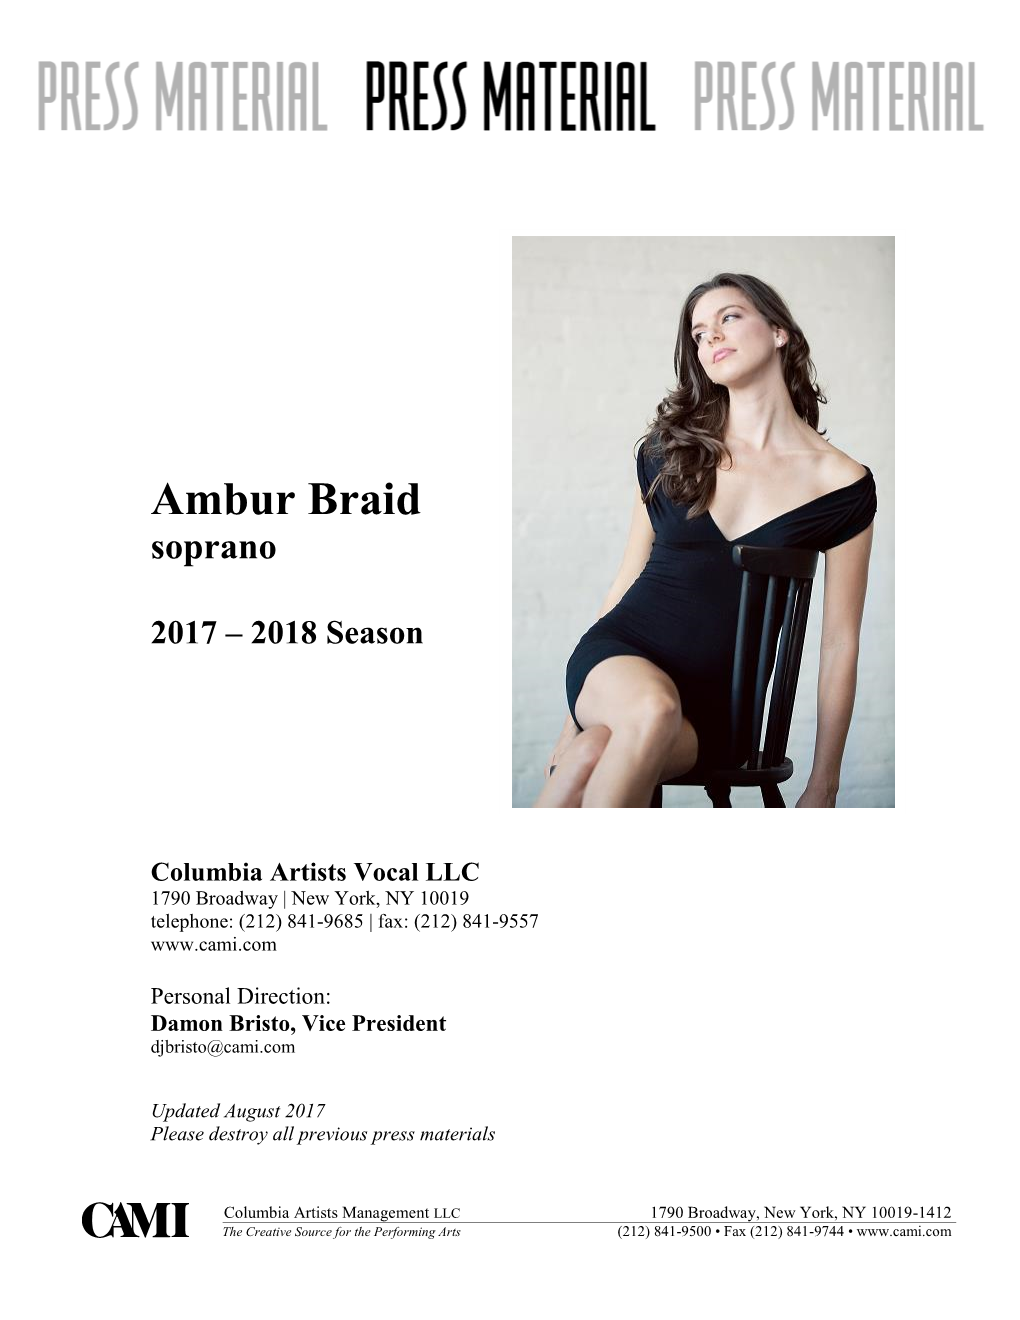 Ambur Braid Soprano 2017